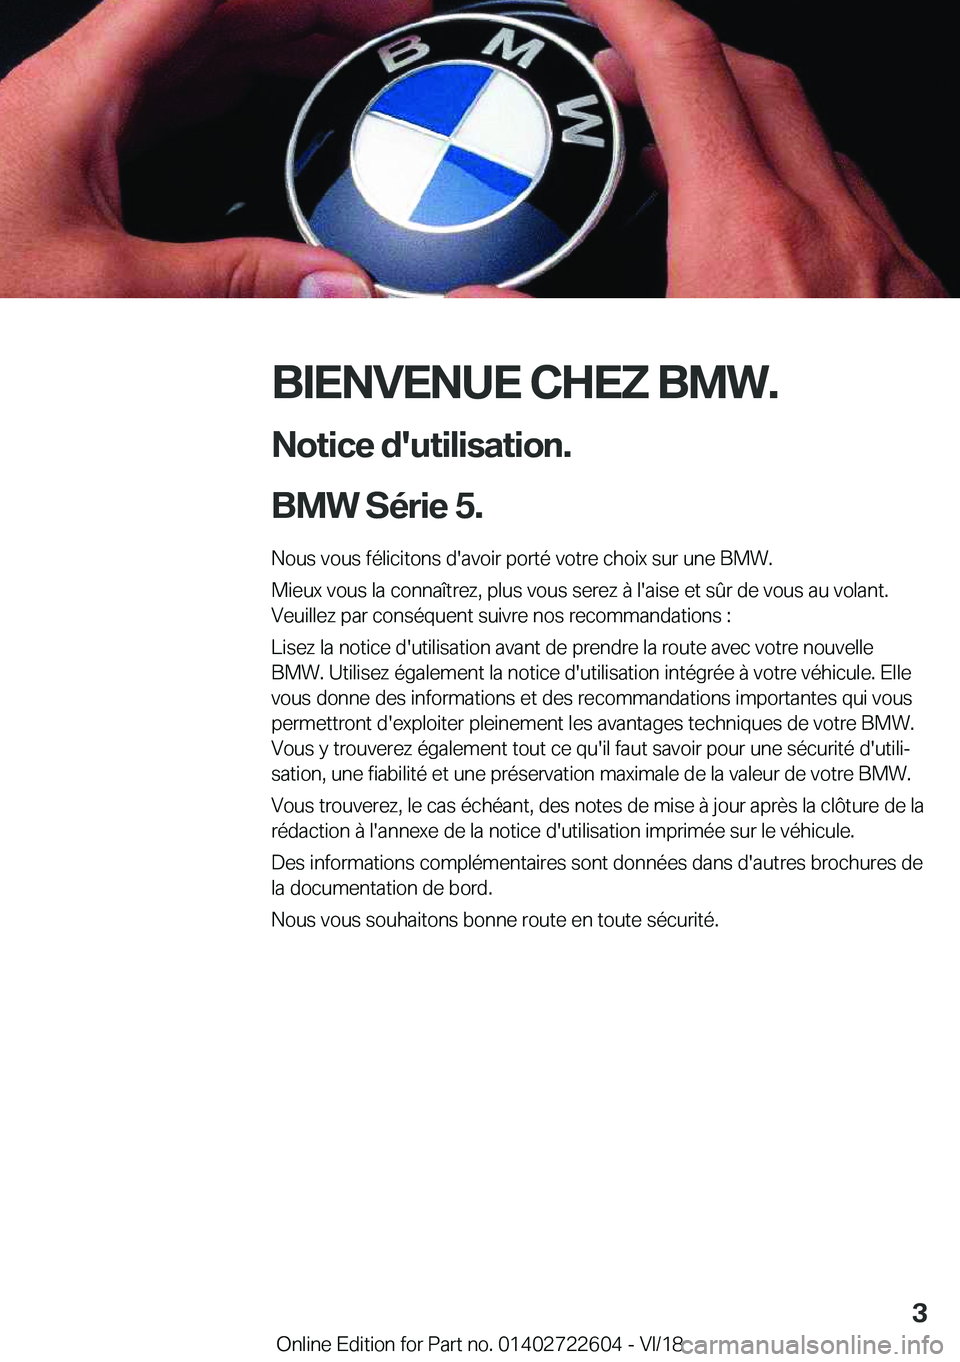 BMW 5 SERIES 2019  Notices Demploi (in French) �B�I�E�N�V�E�N�U�E��C�H�E�Z��B�M�W�.�N�o�t�i�c�e��d�'�u�t�i�l�i�s�a�t�i�o�n�.
�B�M�W��S�é�r�i�e��5�.
�N�o�u�s��v�o�u�s��f�é�l�i�c�i�t�o�n�s��d�'�a�v�o�i�r��p�o�r�t�é��v�o�t�r�e��